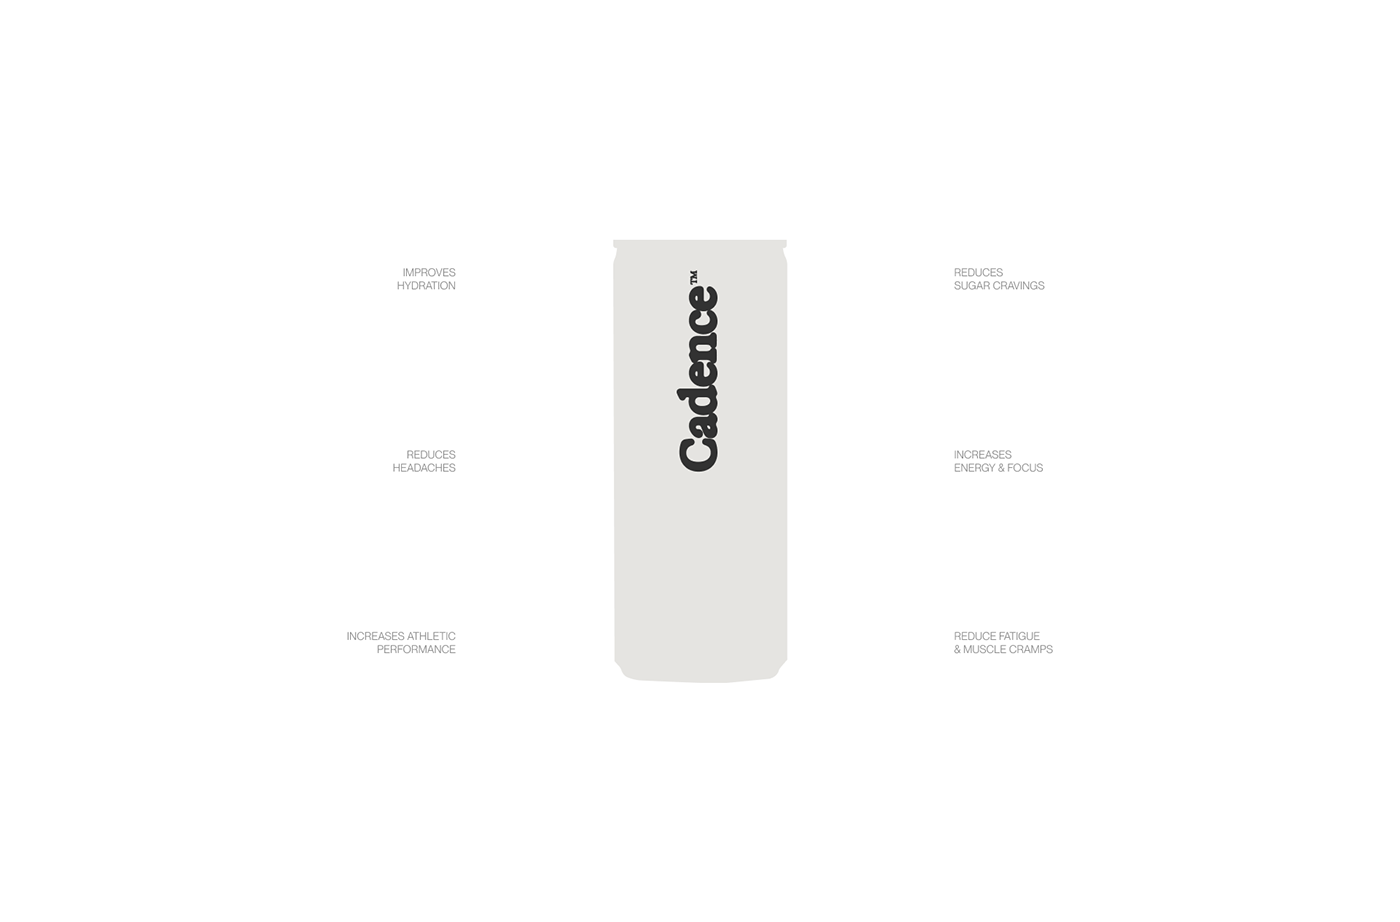 Artifact from the Cadence’s Exquisite Branding & Packaging Design article on Abduzeedo